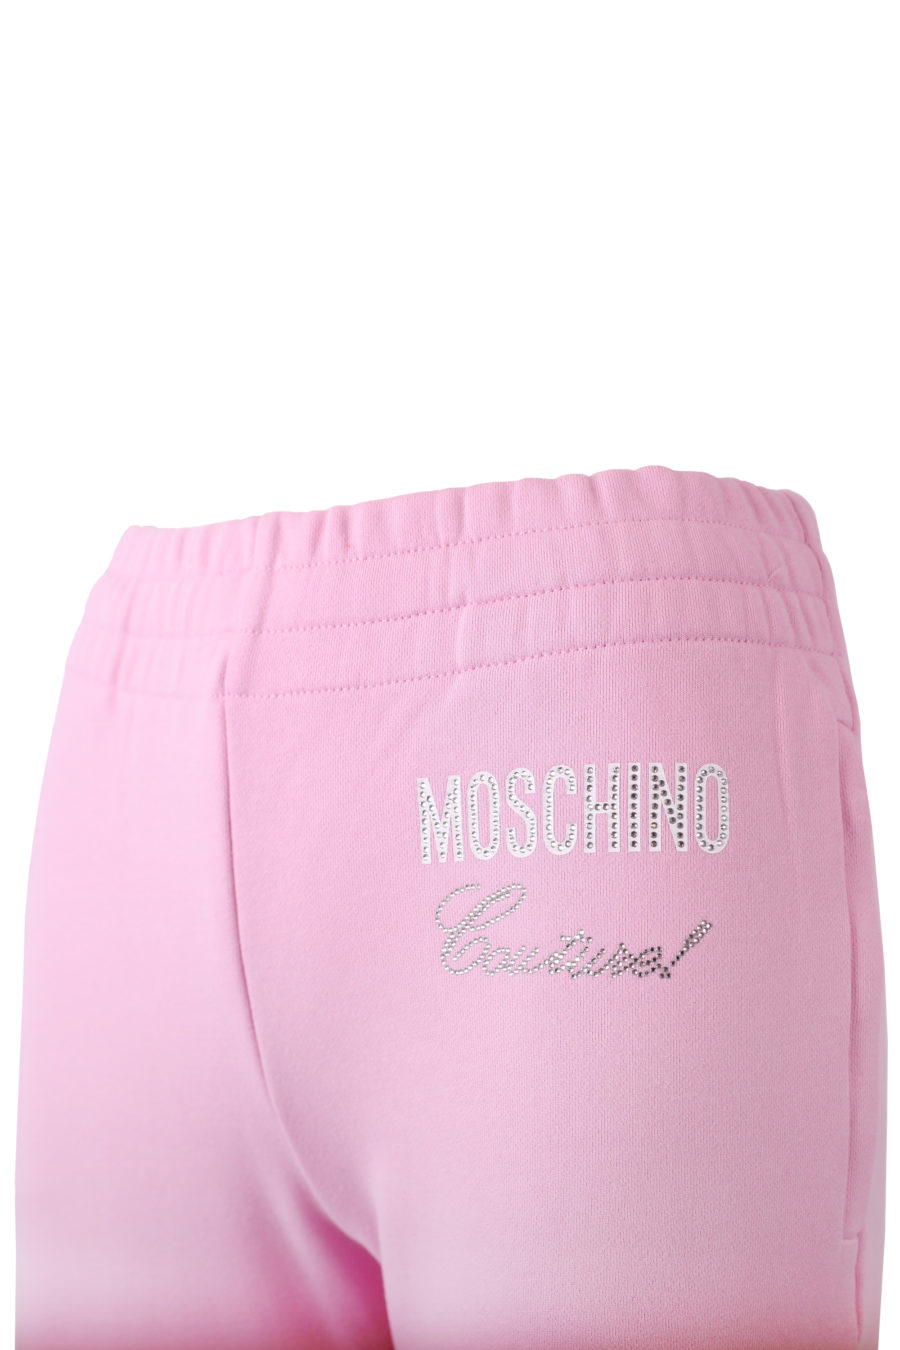 Pantalón de color rosa con logo de cristales - IMG 7285 copia